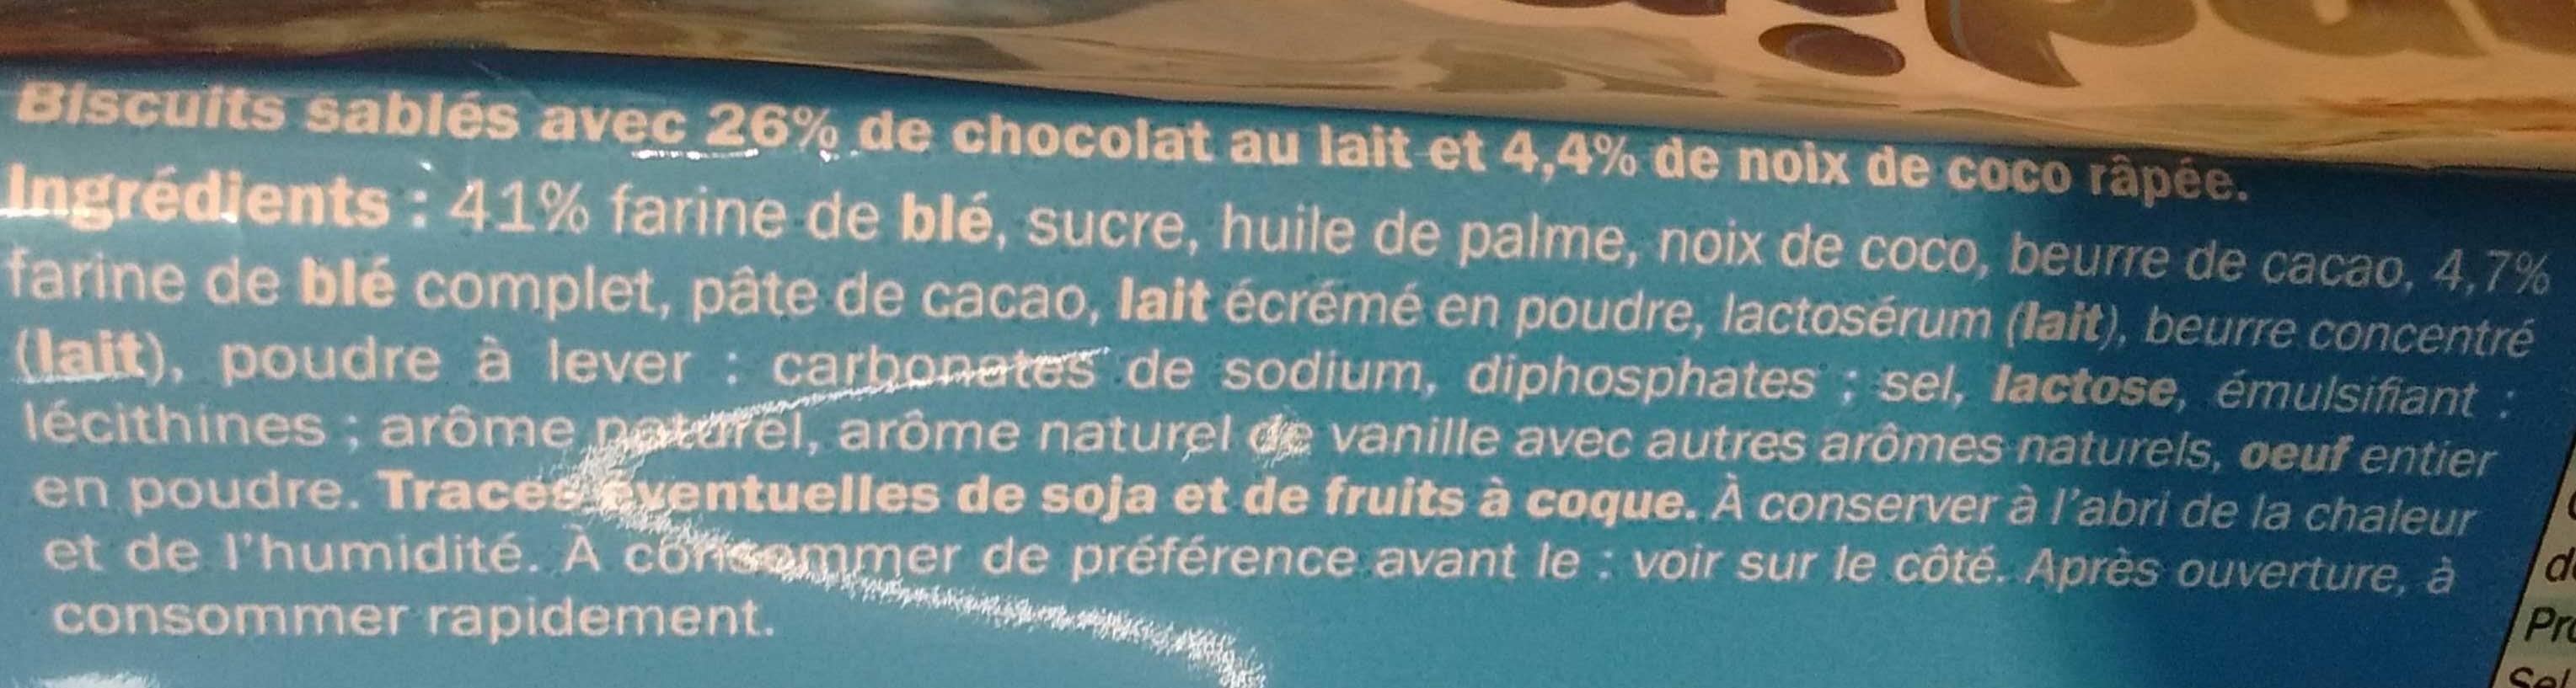 Sablés chocolat-coco - Ingredients - fr